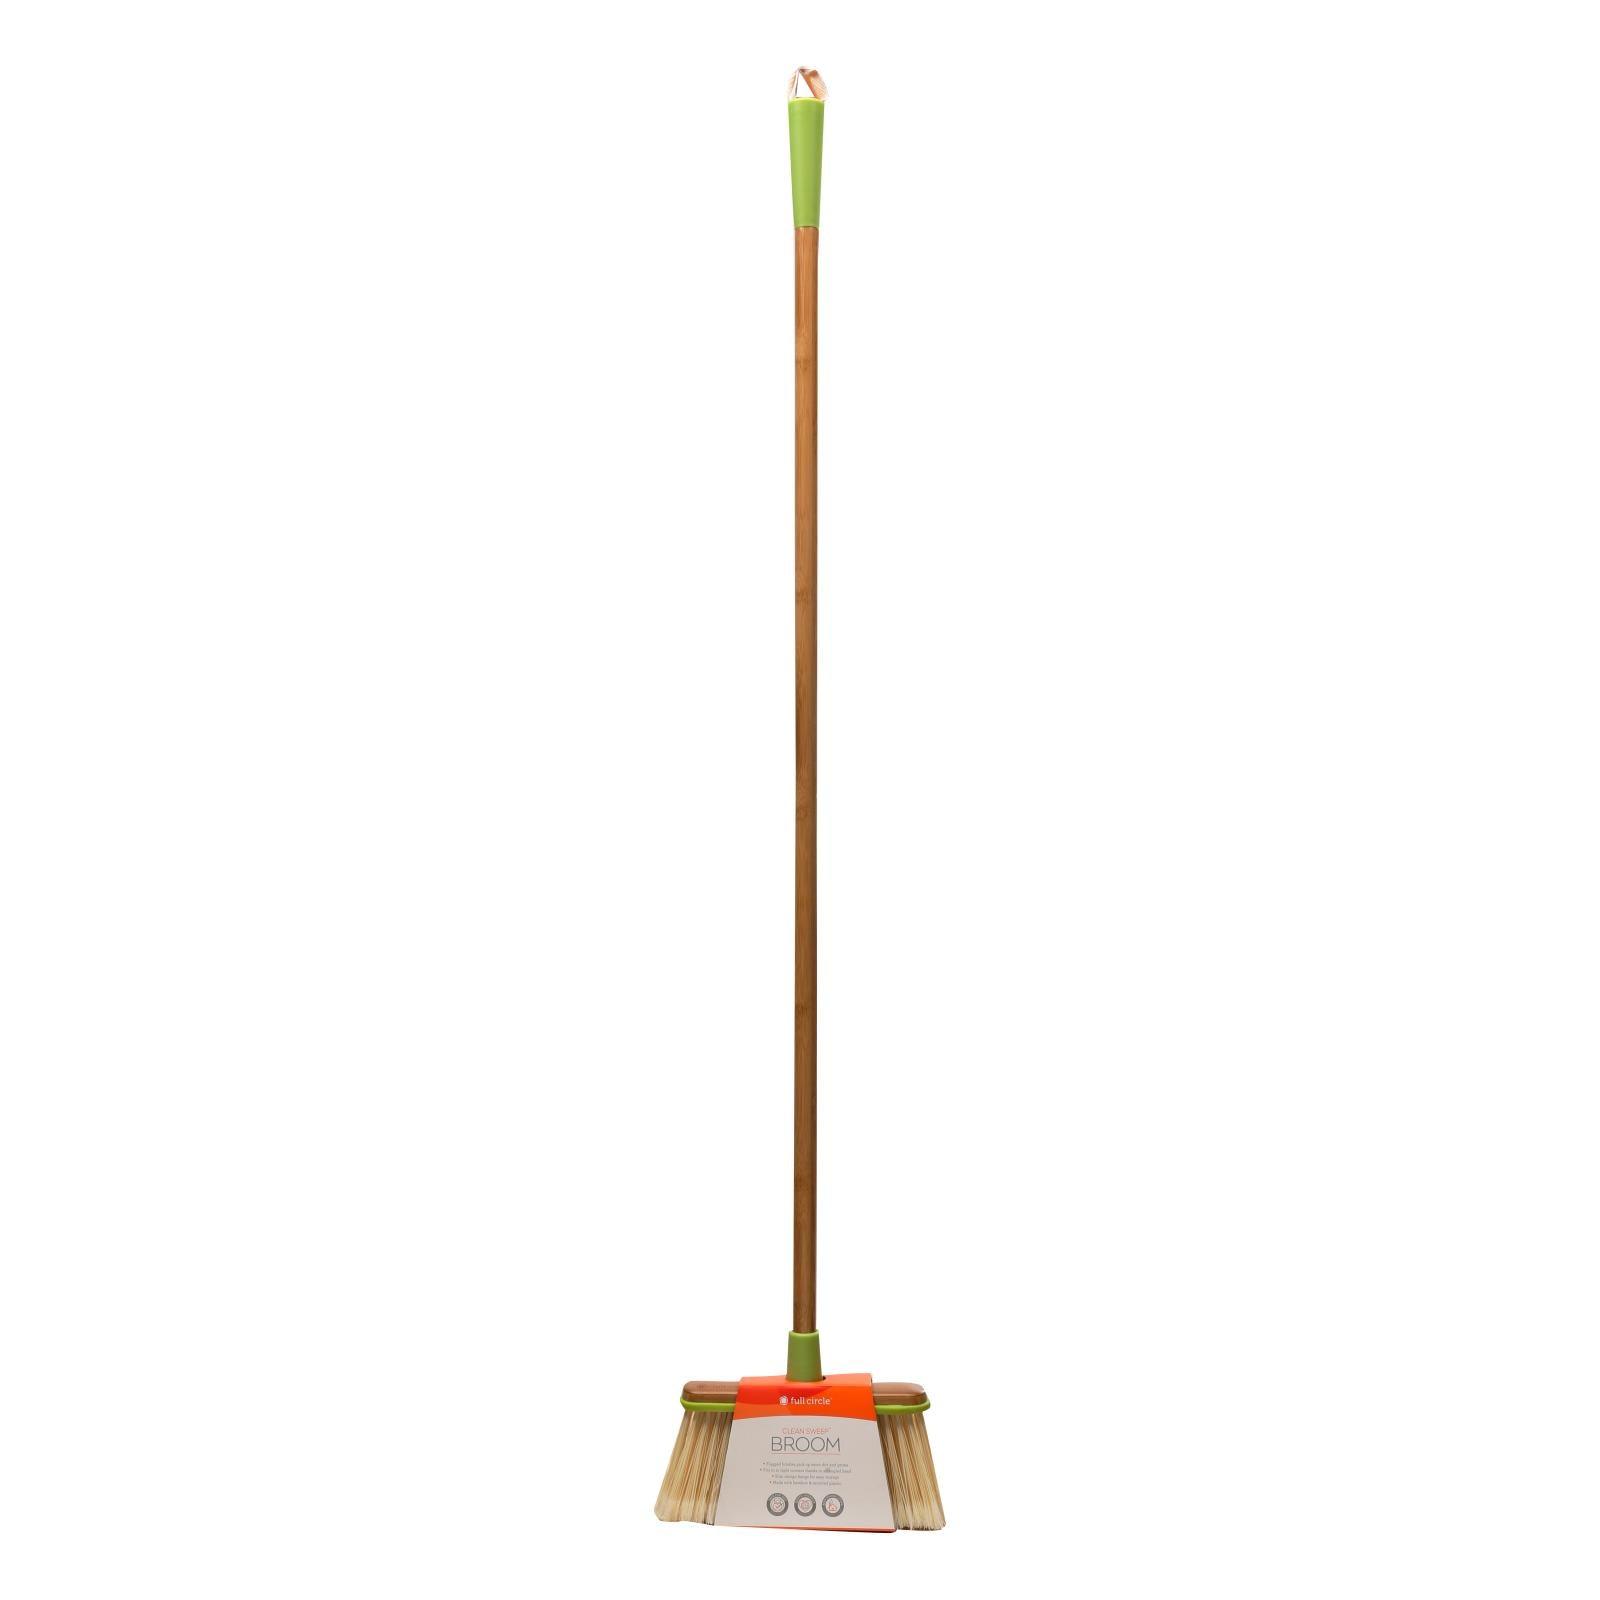 Full Circle Home - Clean Sweep Wood Broom - Green - 1 Count - Loomini